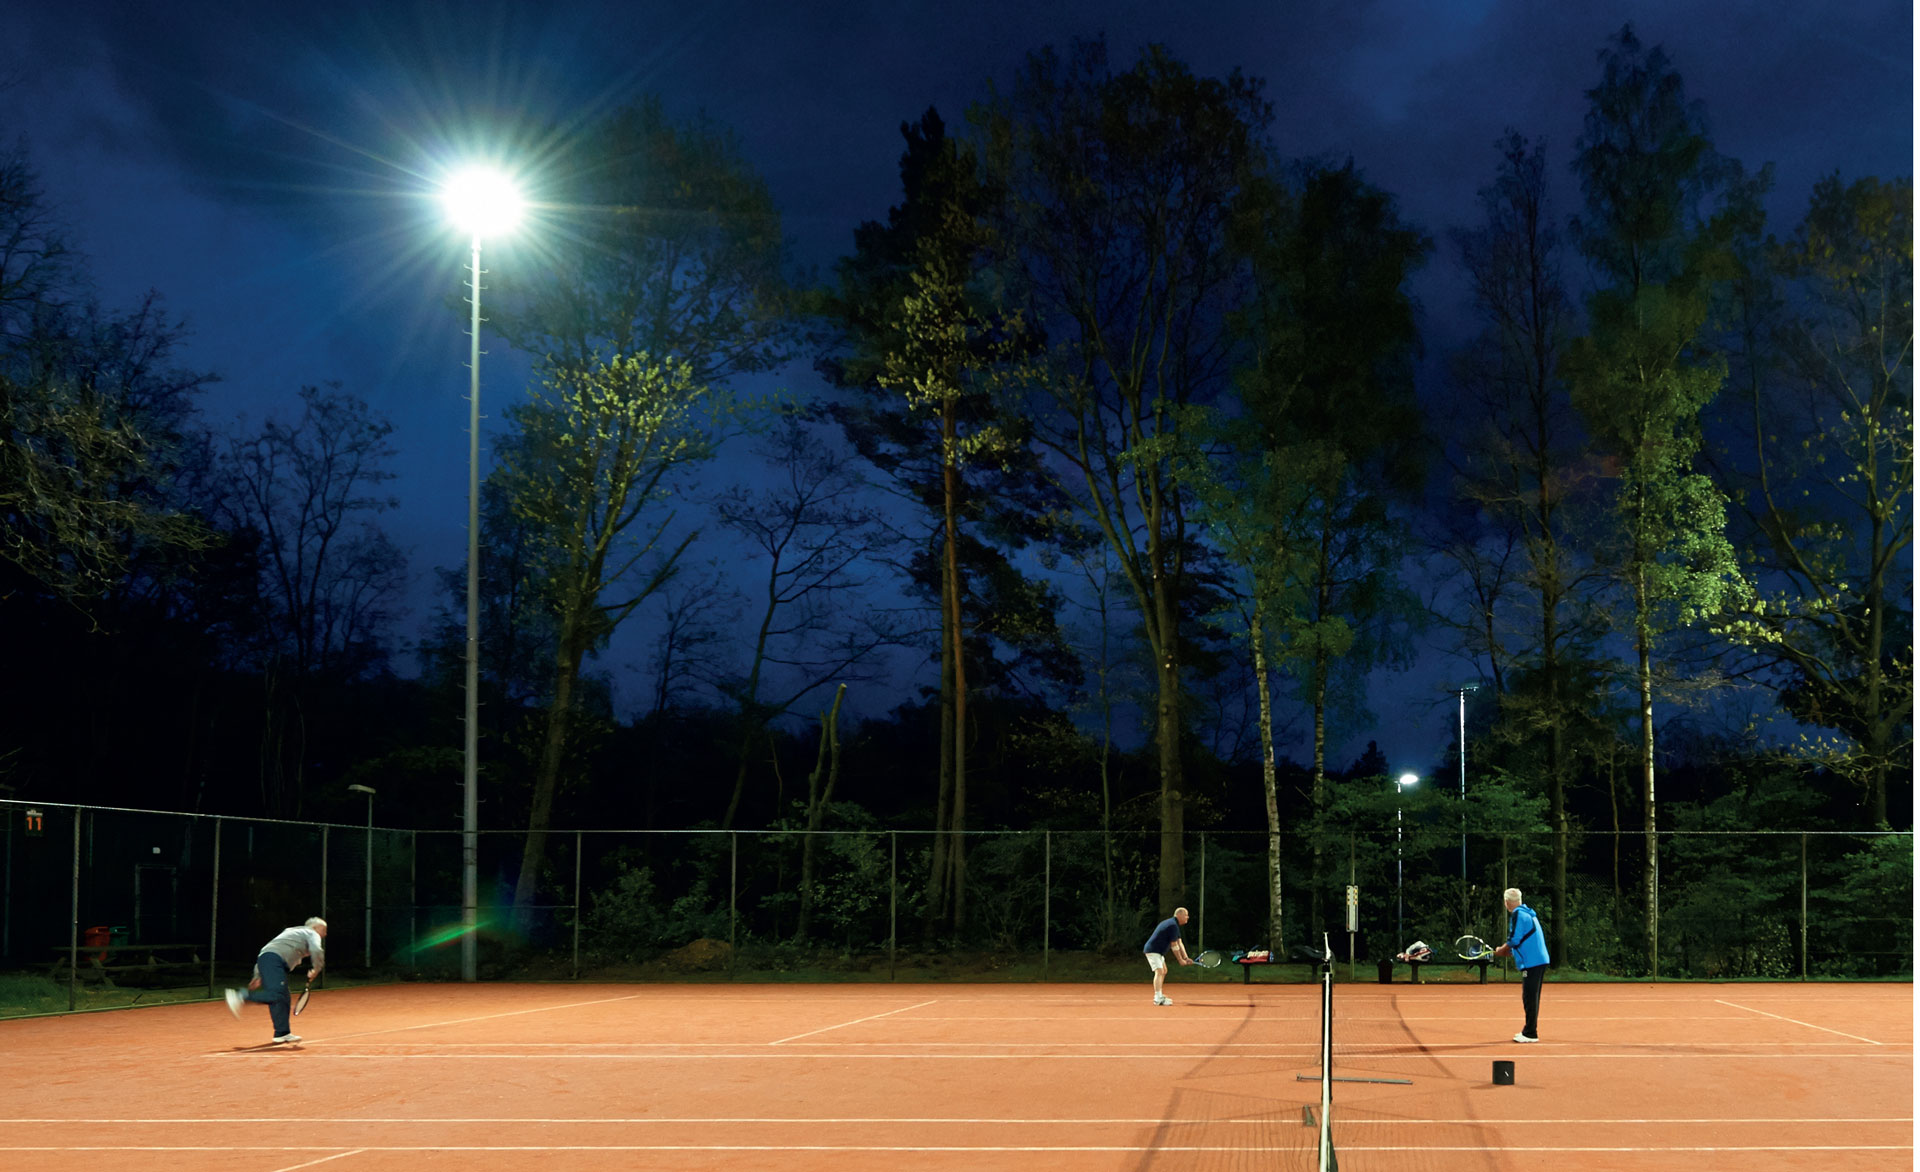 Tennis court lighting